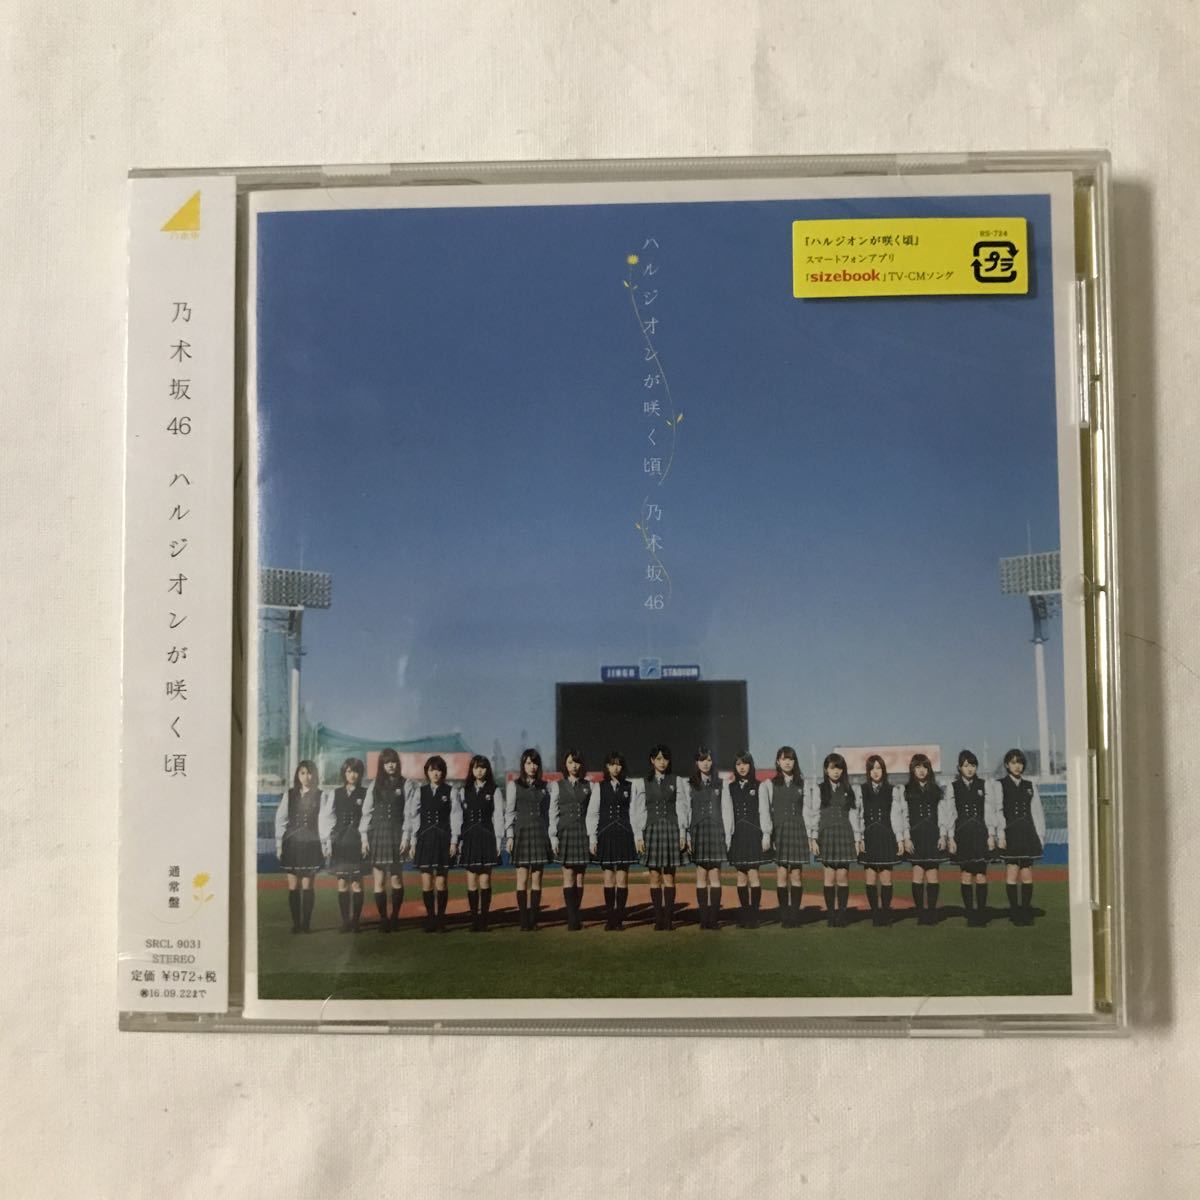 【I003】乃木坂46 ハルジオンが咲く頃 通常盤【CD】_画像1